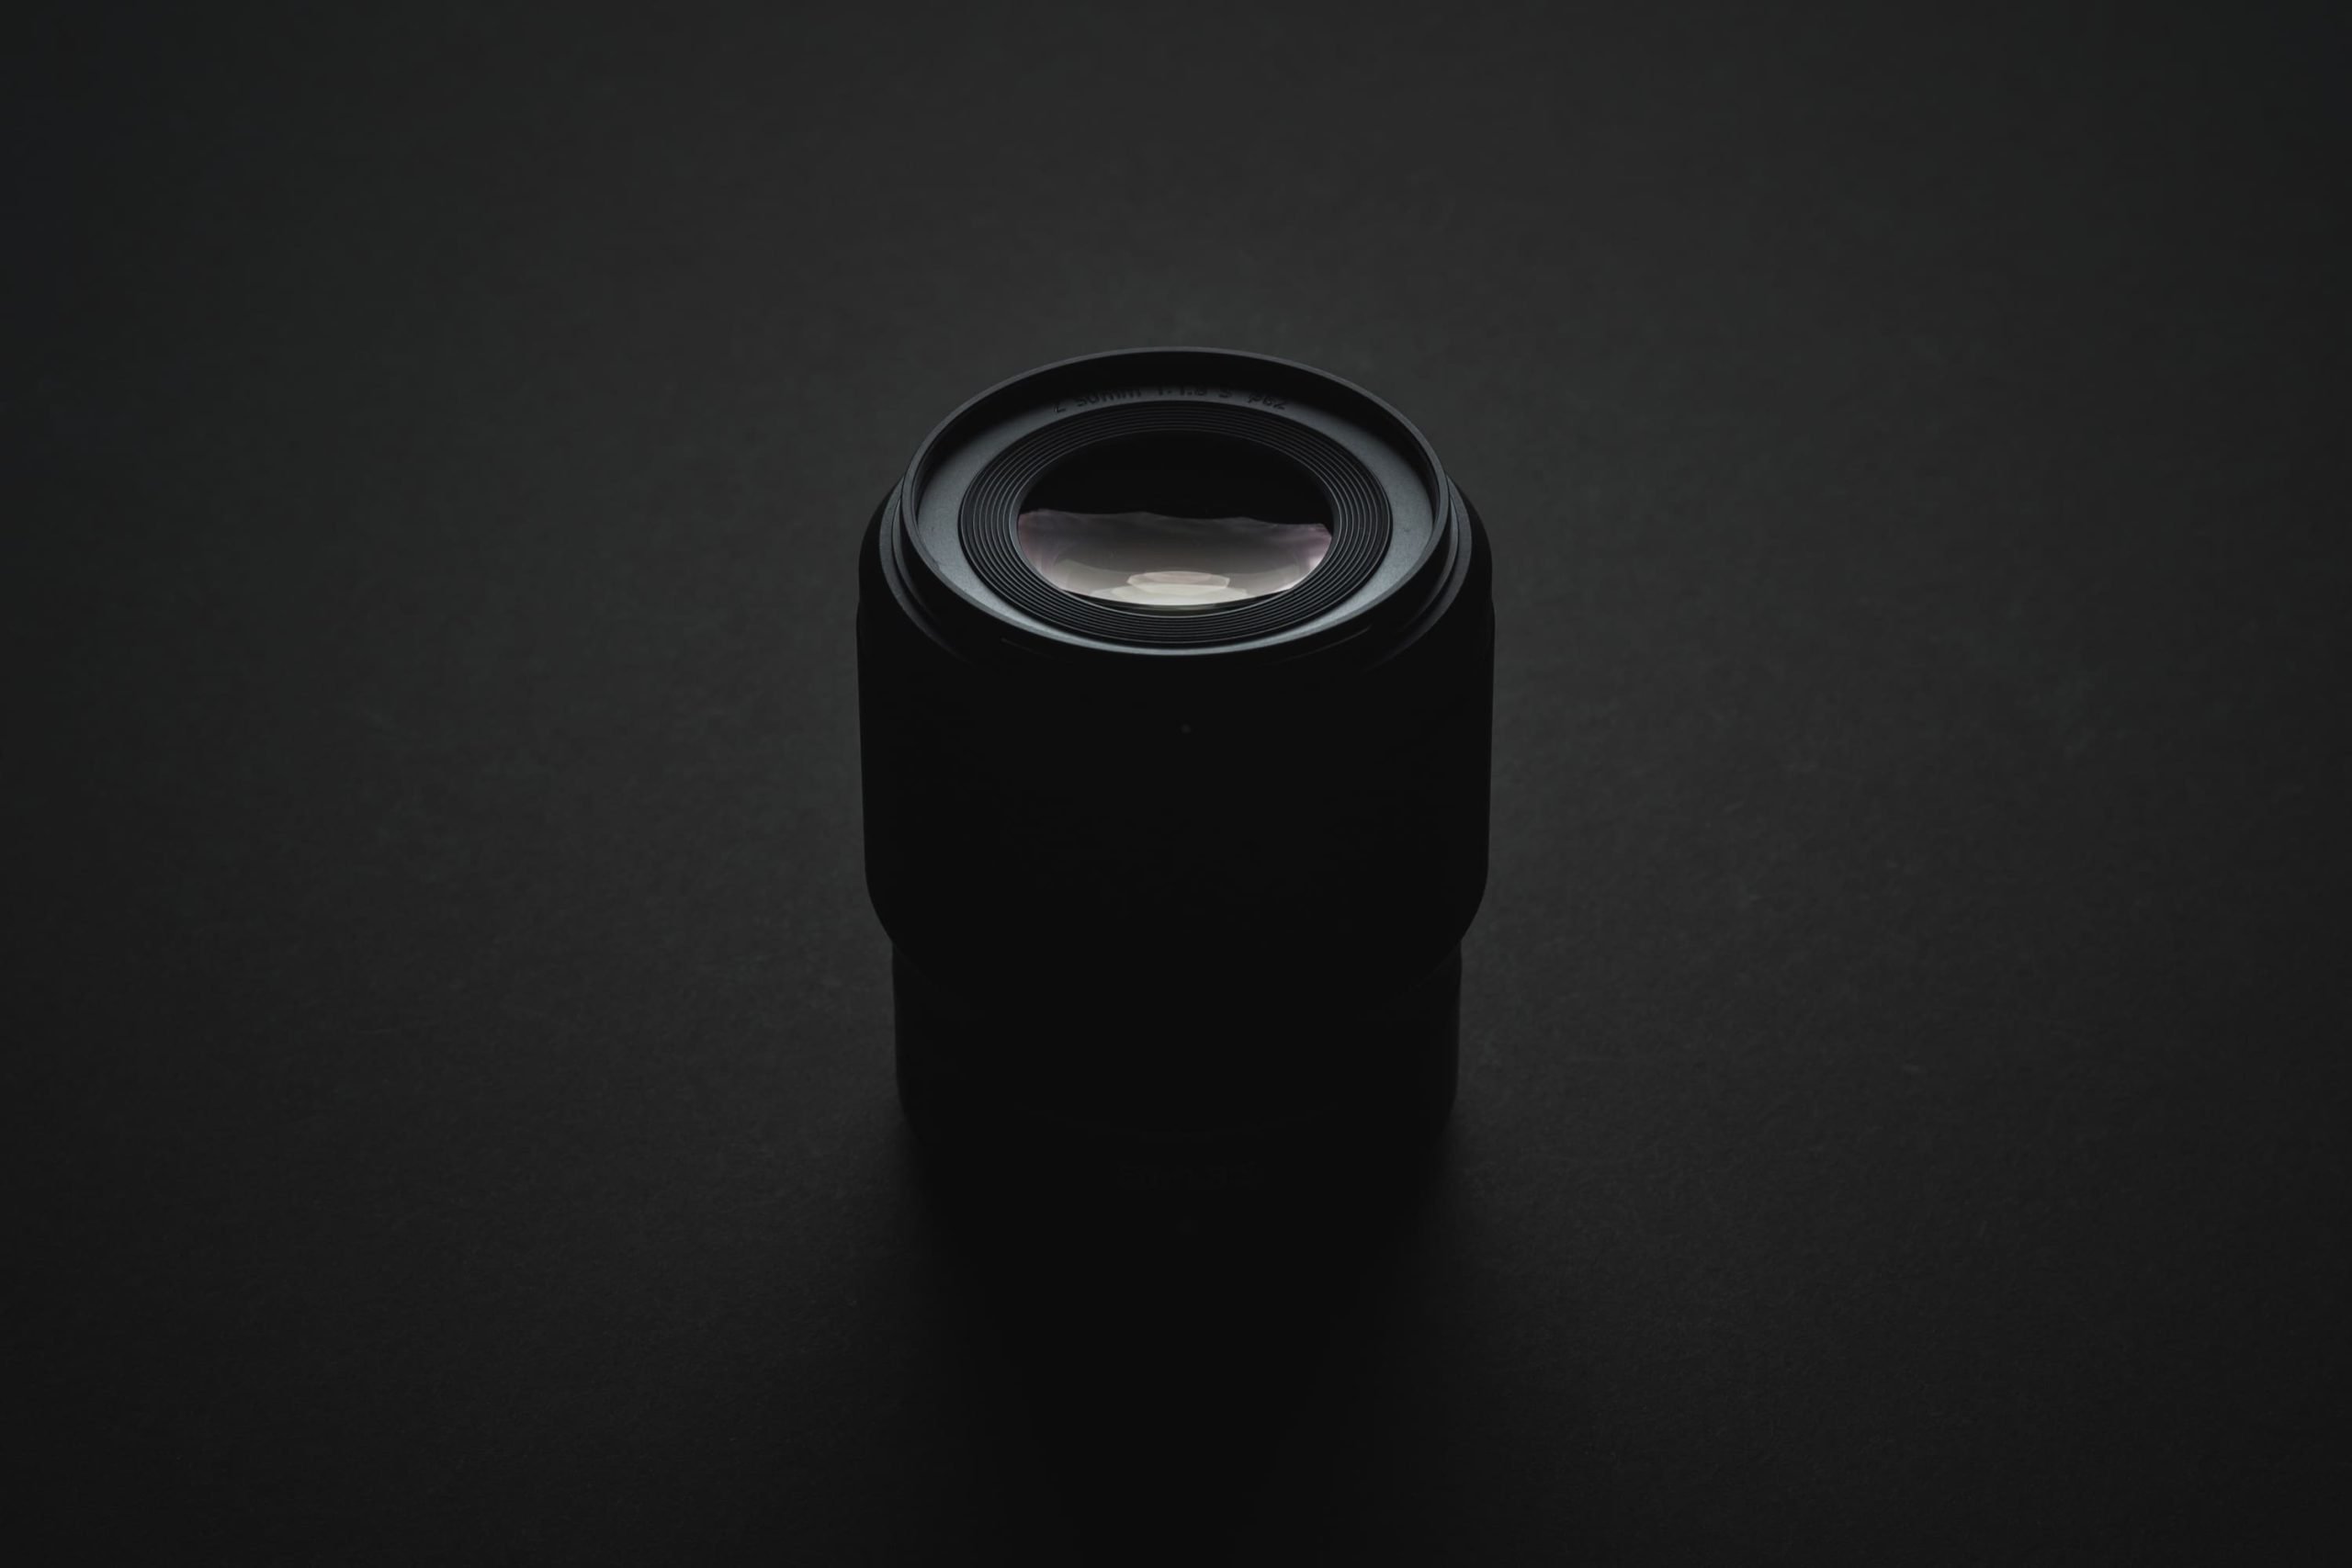 Nikon Z 50mm f1.8 S Lens Review